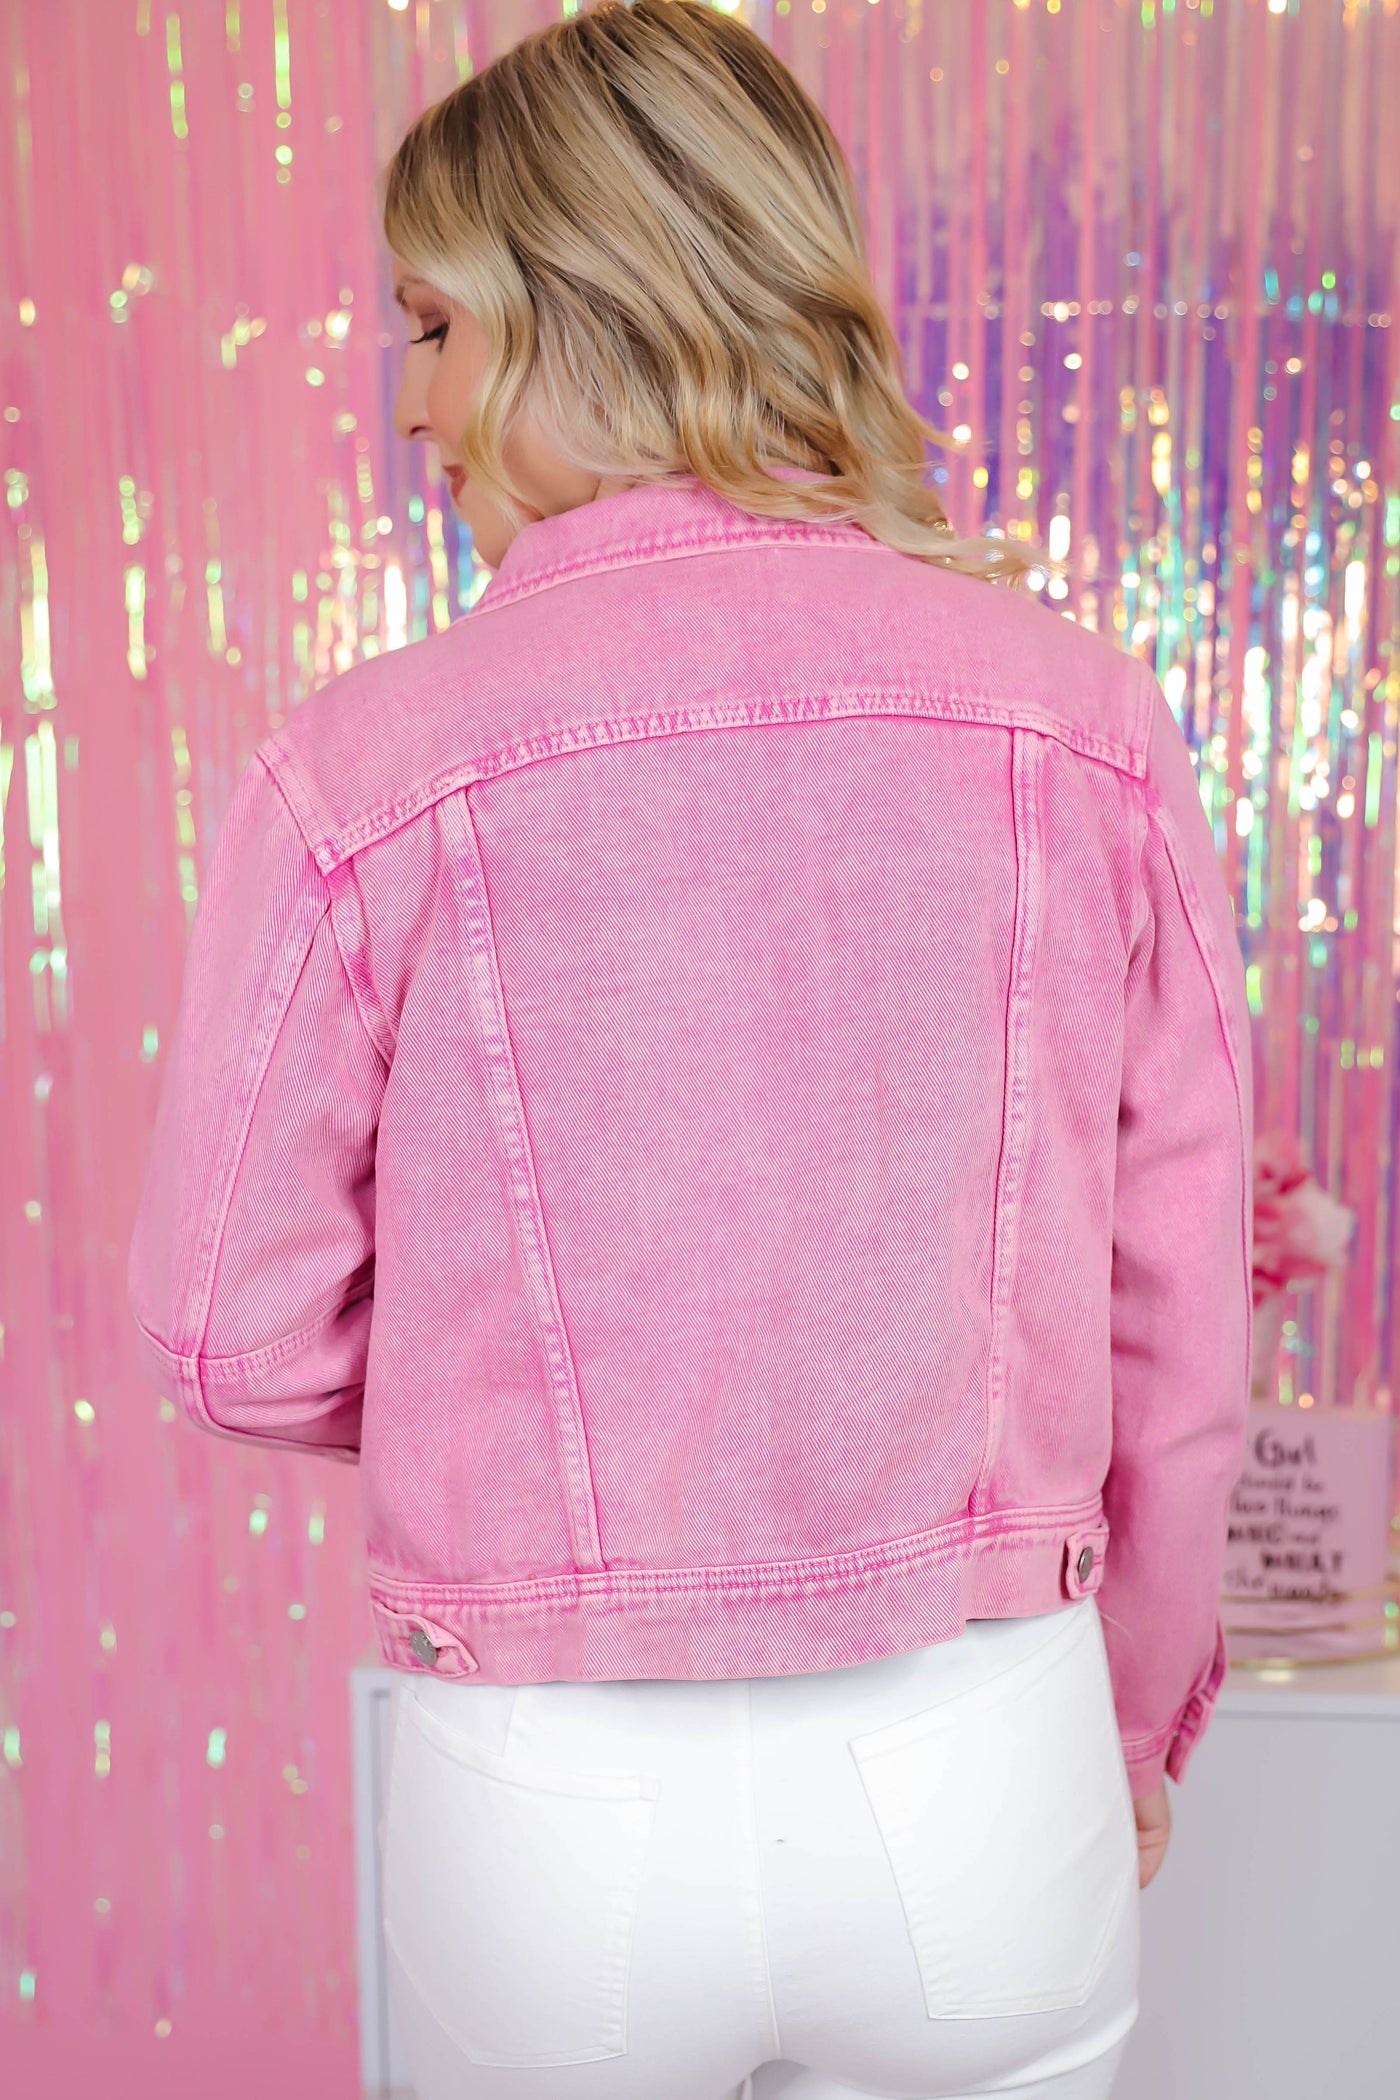 Women's Hot Pink Denim Jacket- Trendy Pink Jacket- Cute Pink Denim Jacket